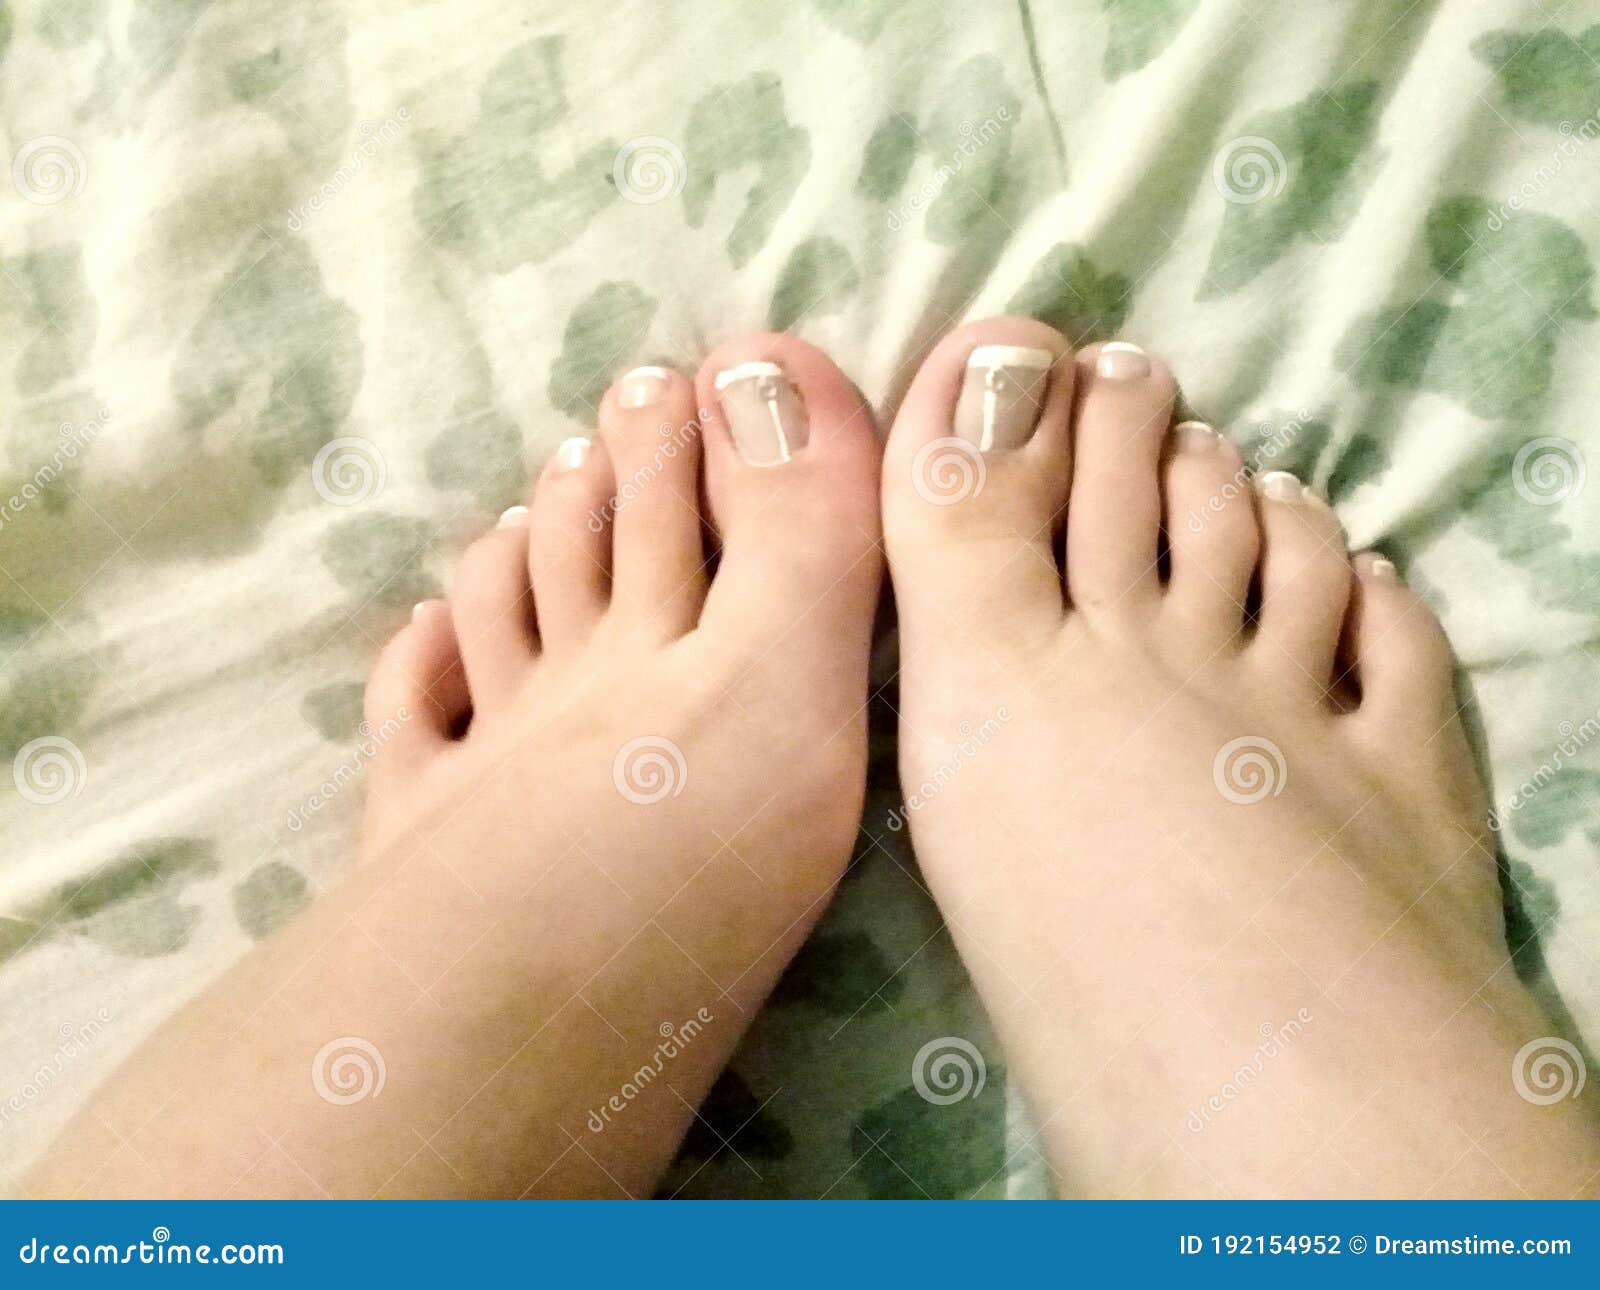 wonderful pretty feet ari beautiful